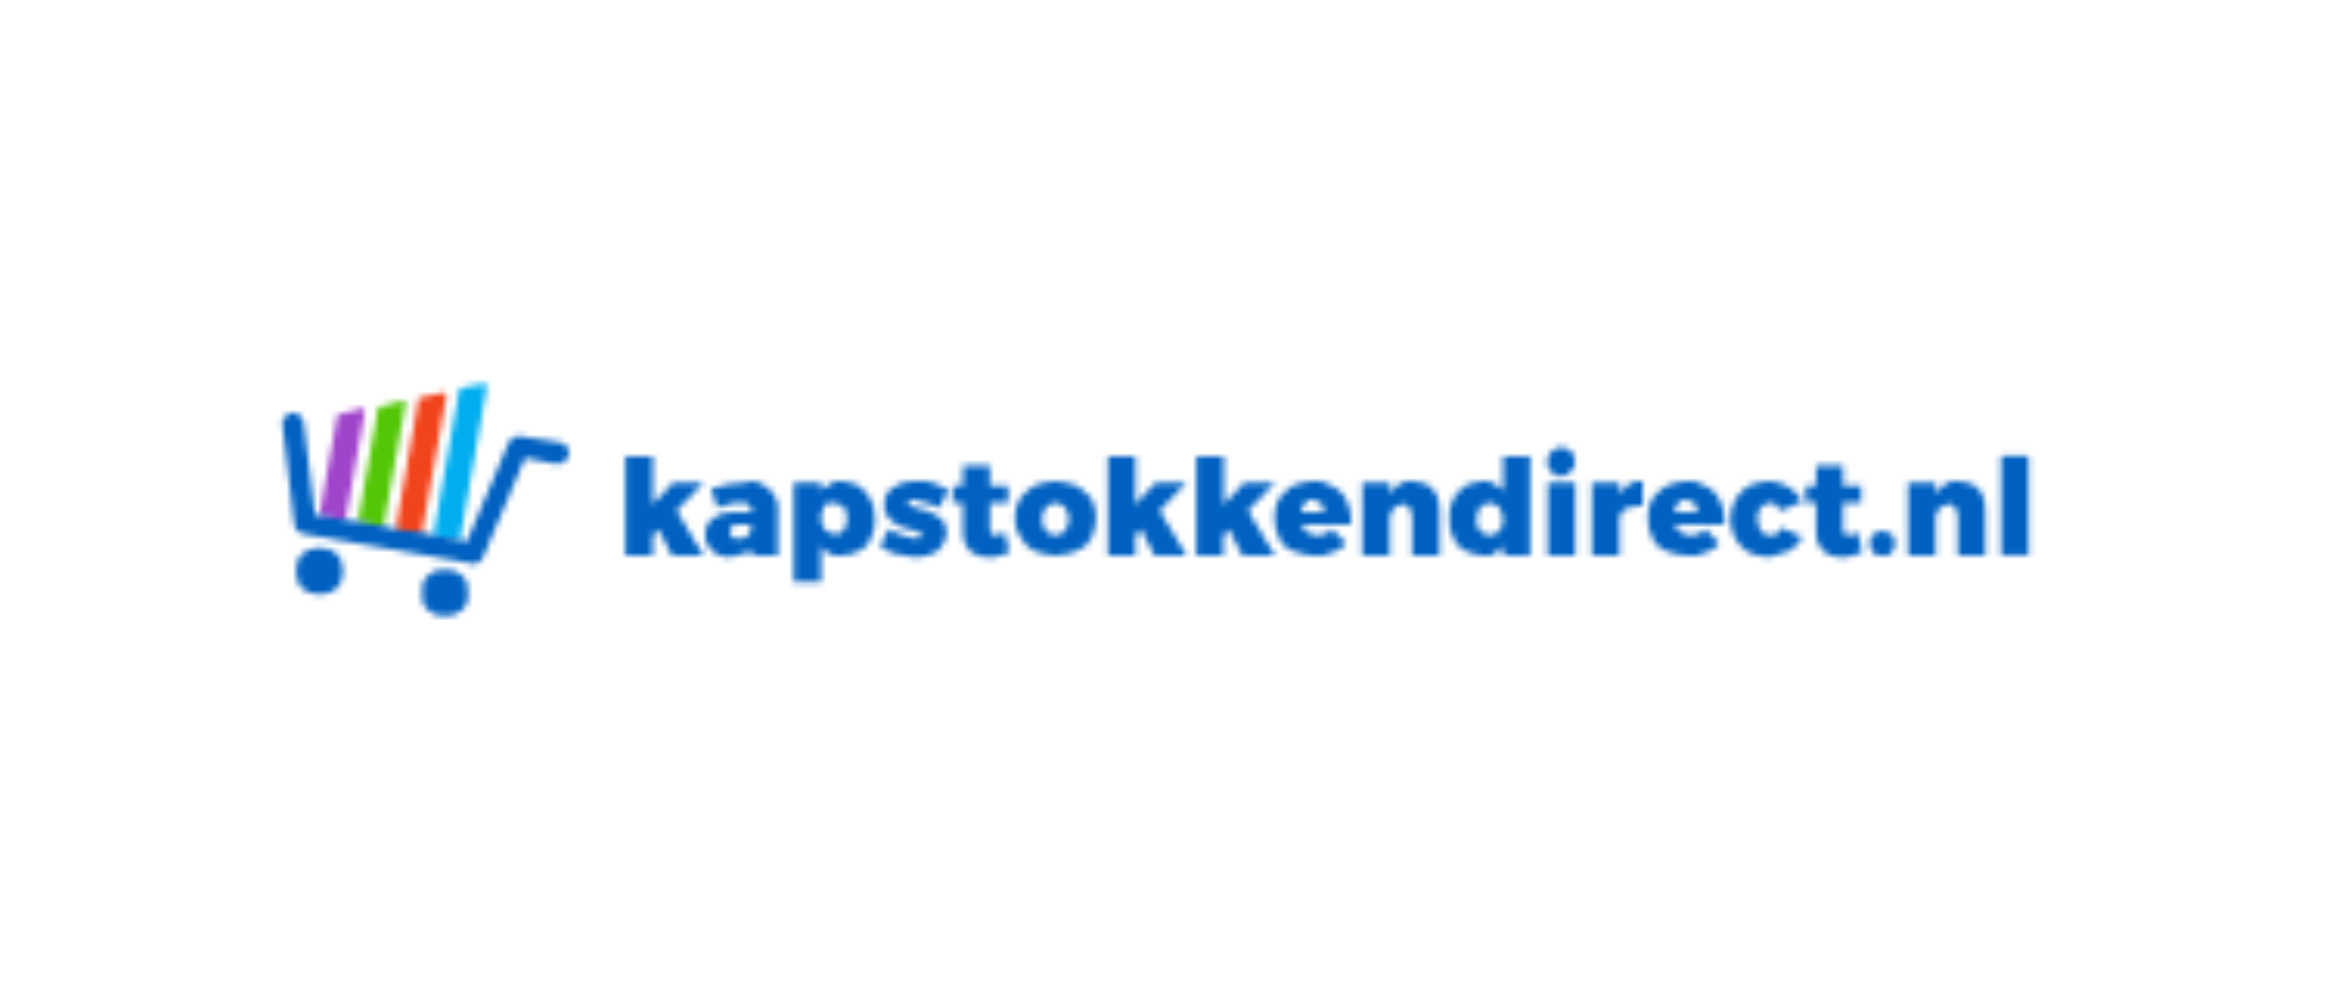 kapstokkendirect.nl